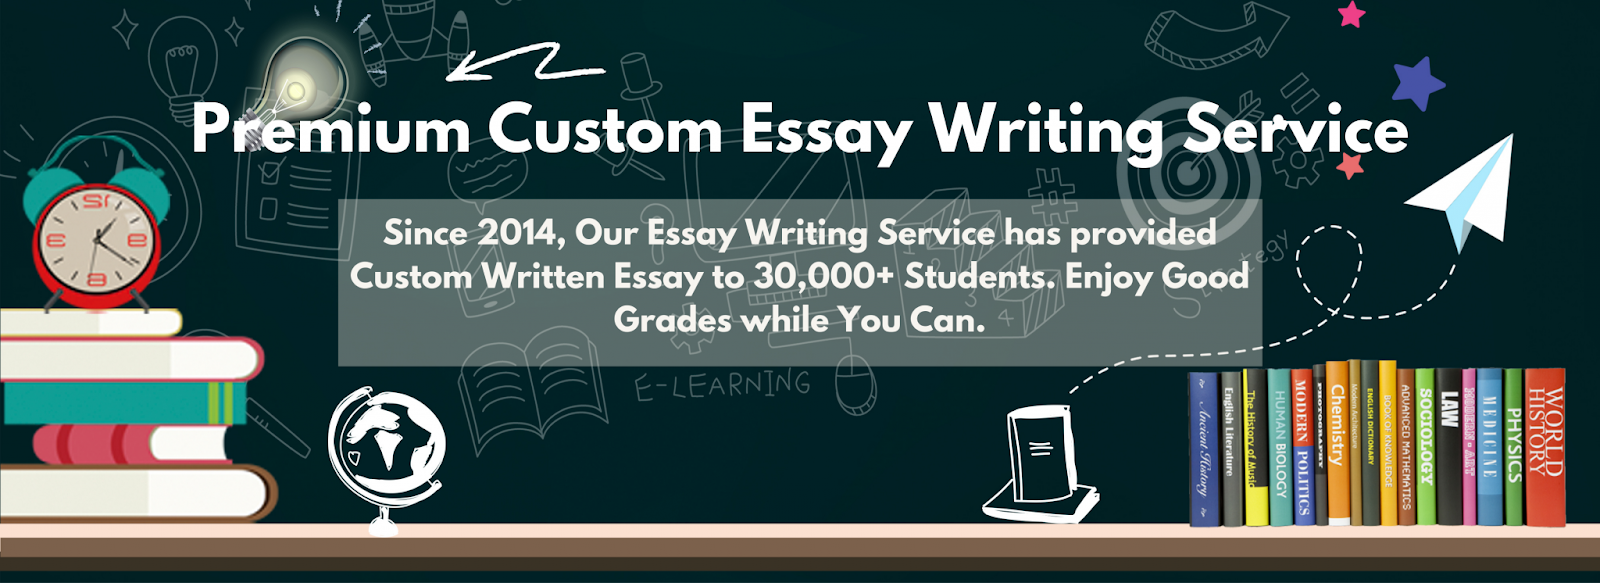  essay writing service houston